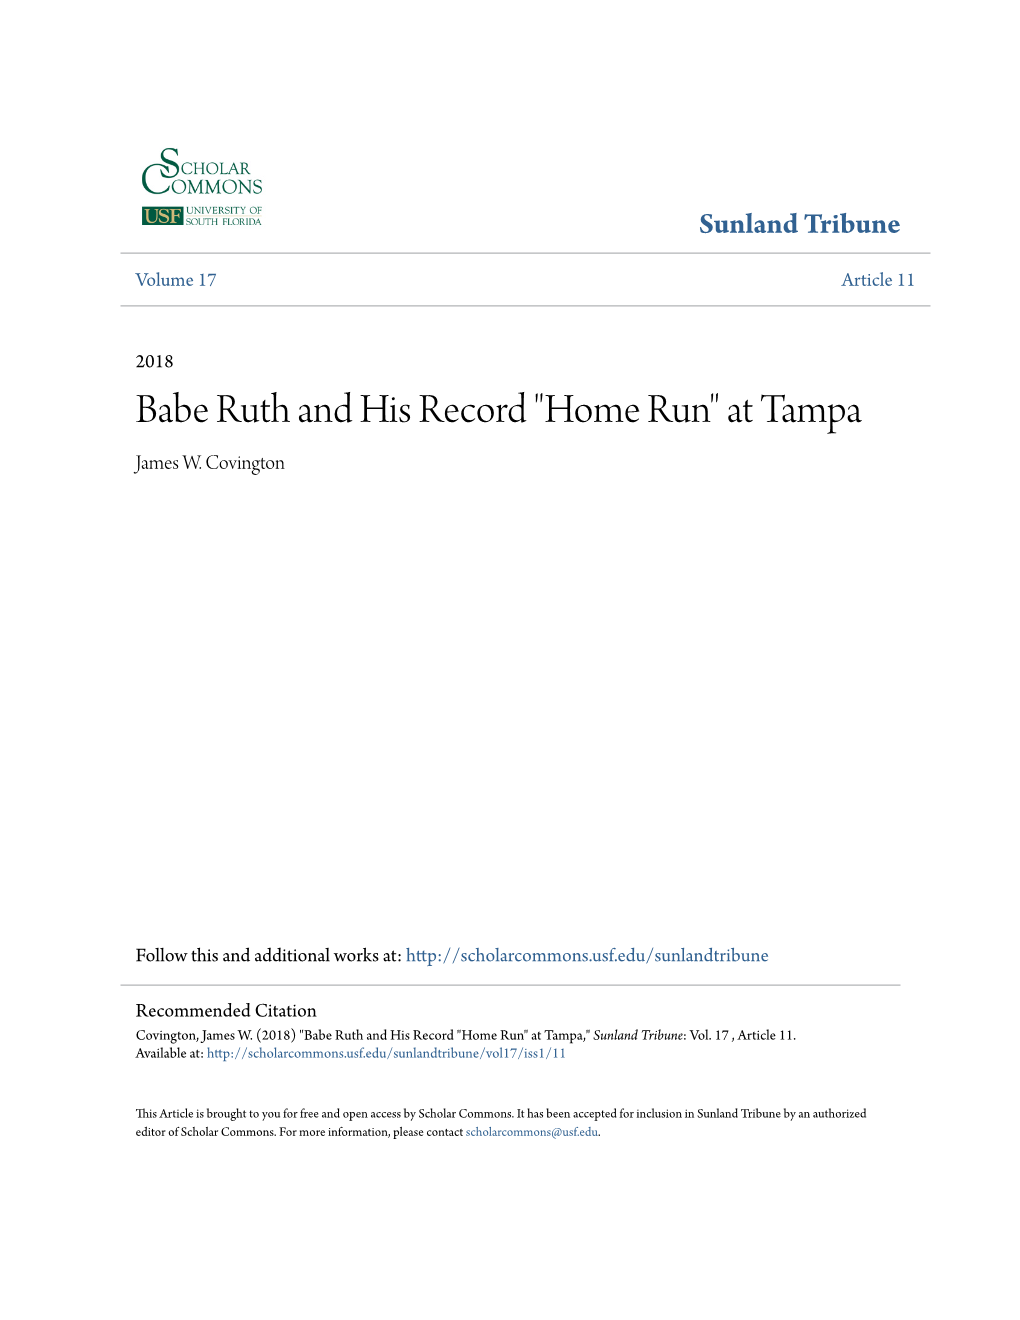 Babe Ruth and His Record "Home Run" at Tampa James W